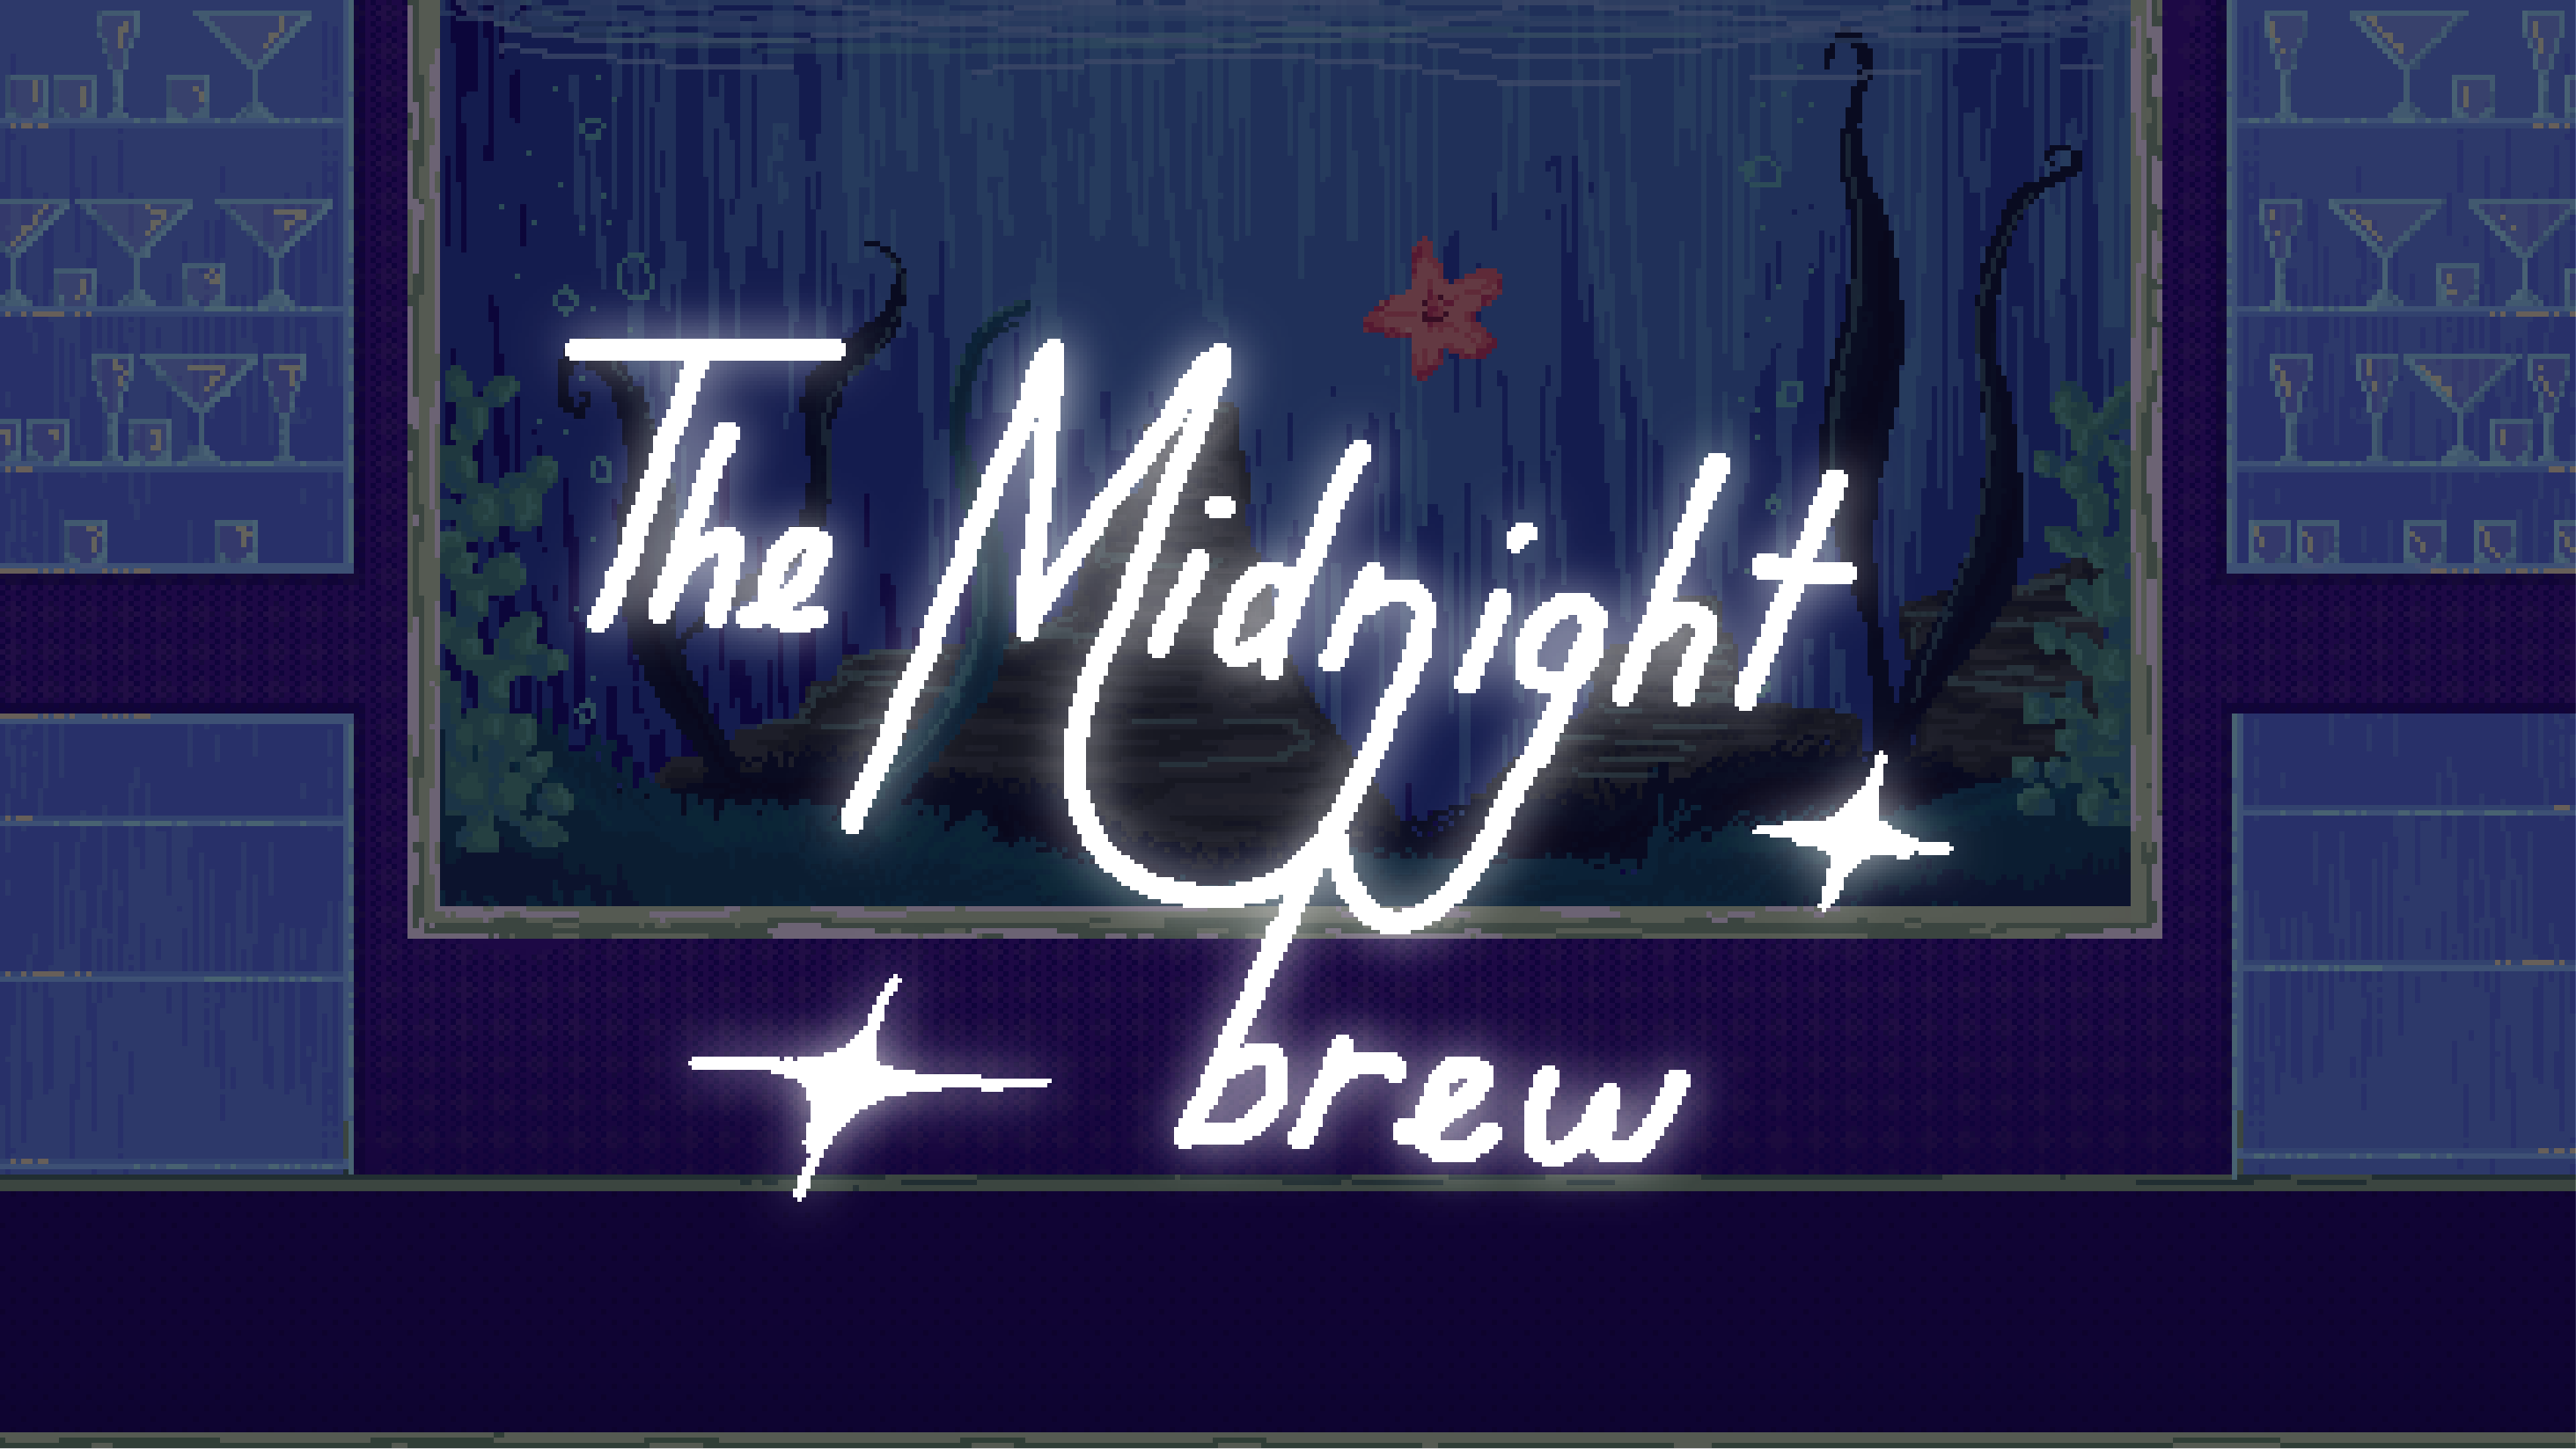 The Midnight Brew